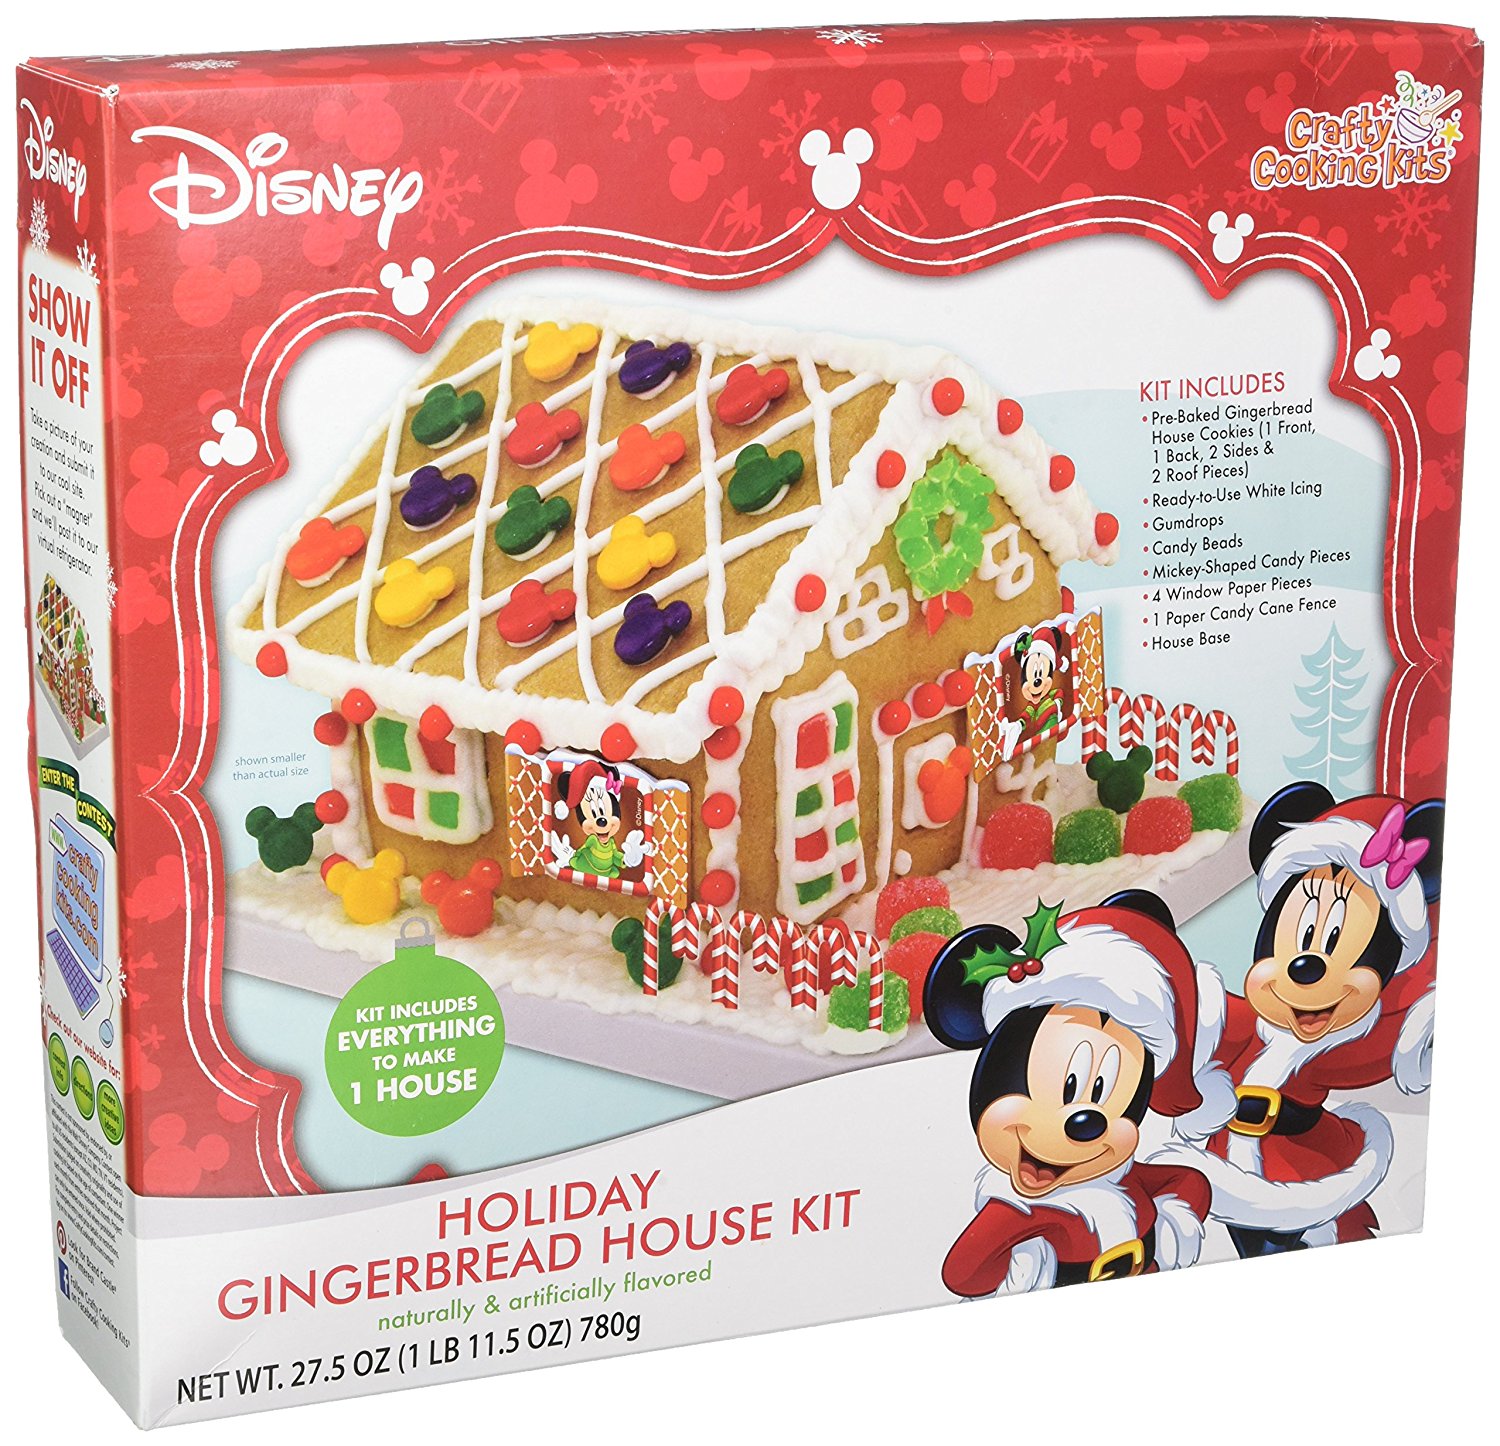 Disney holiday gingerbread house kits.